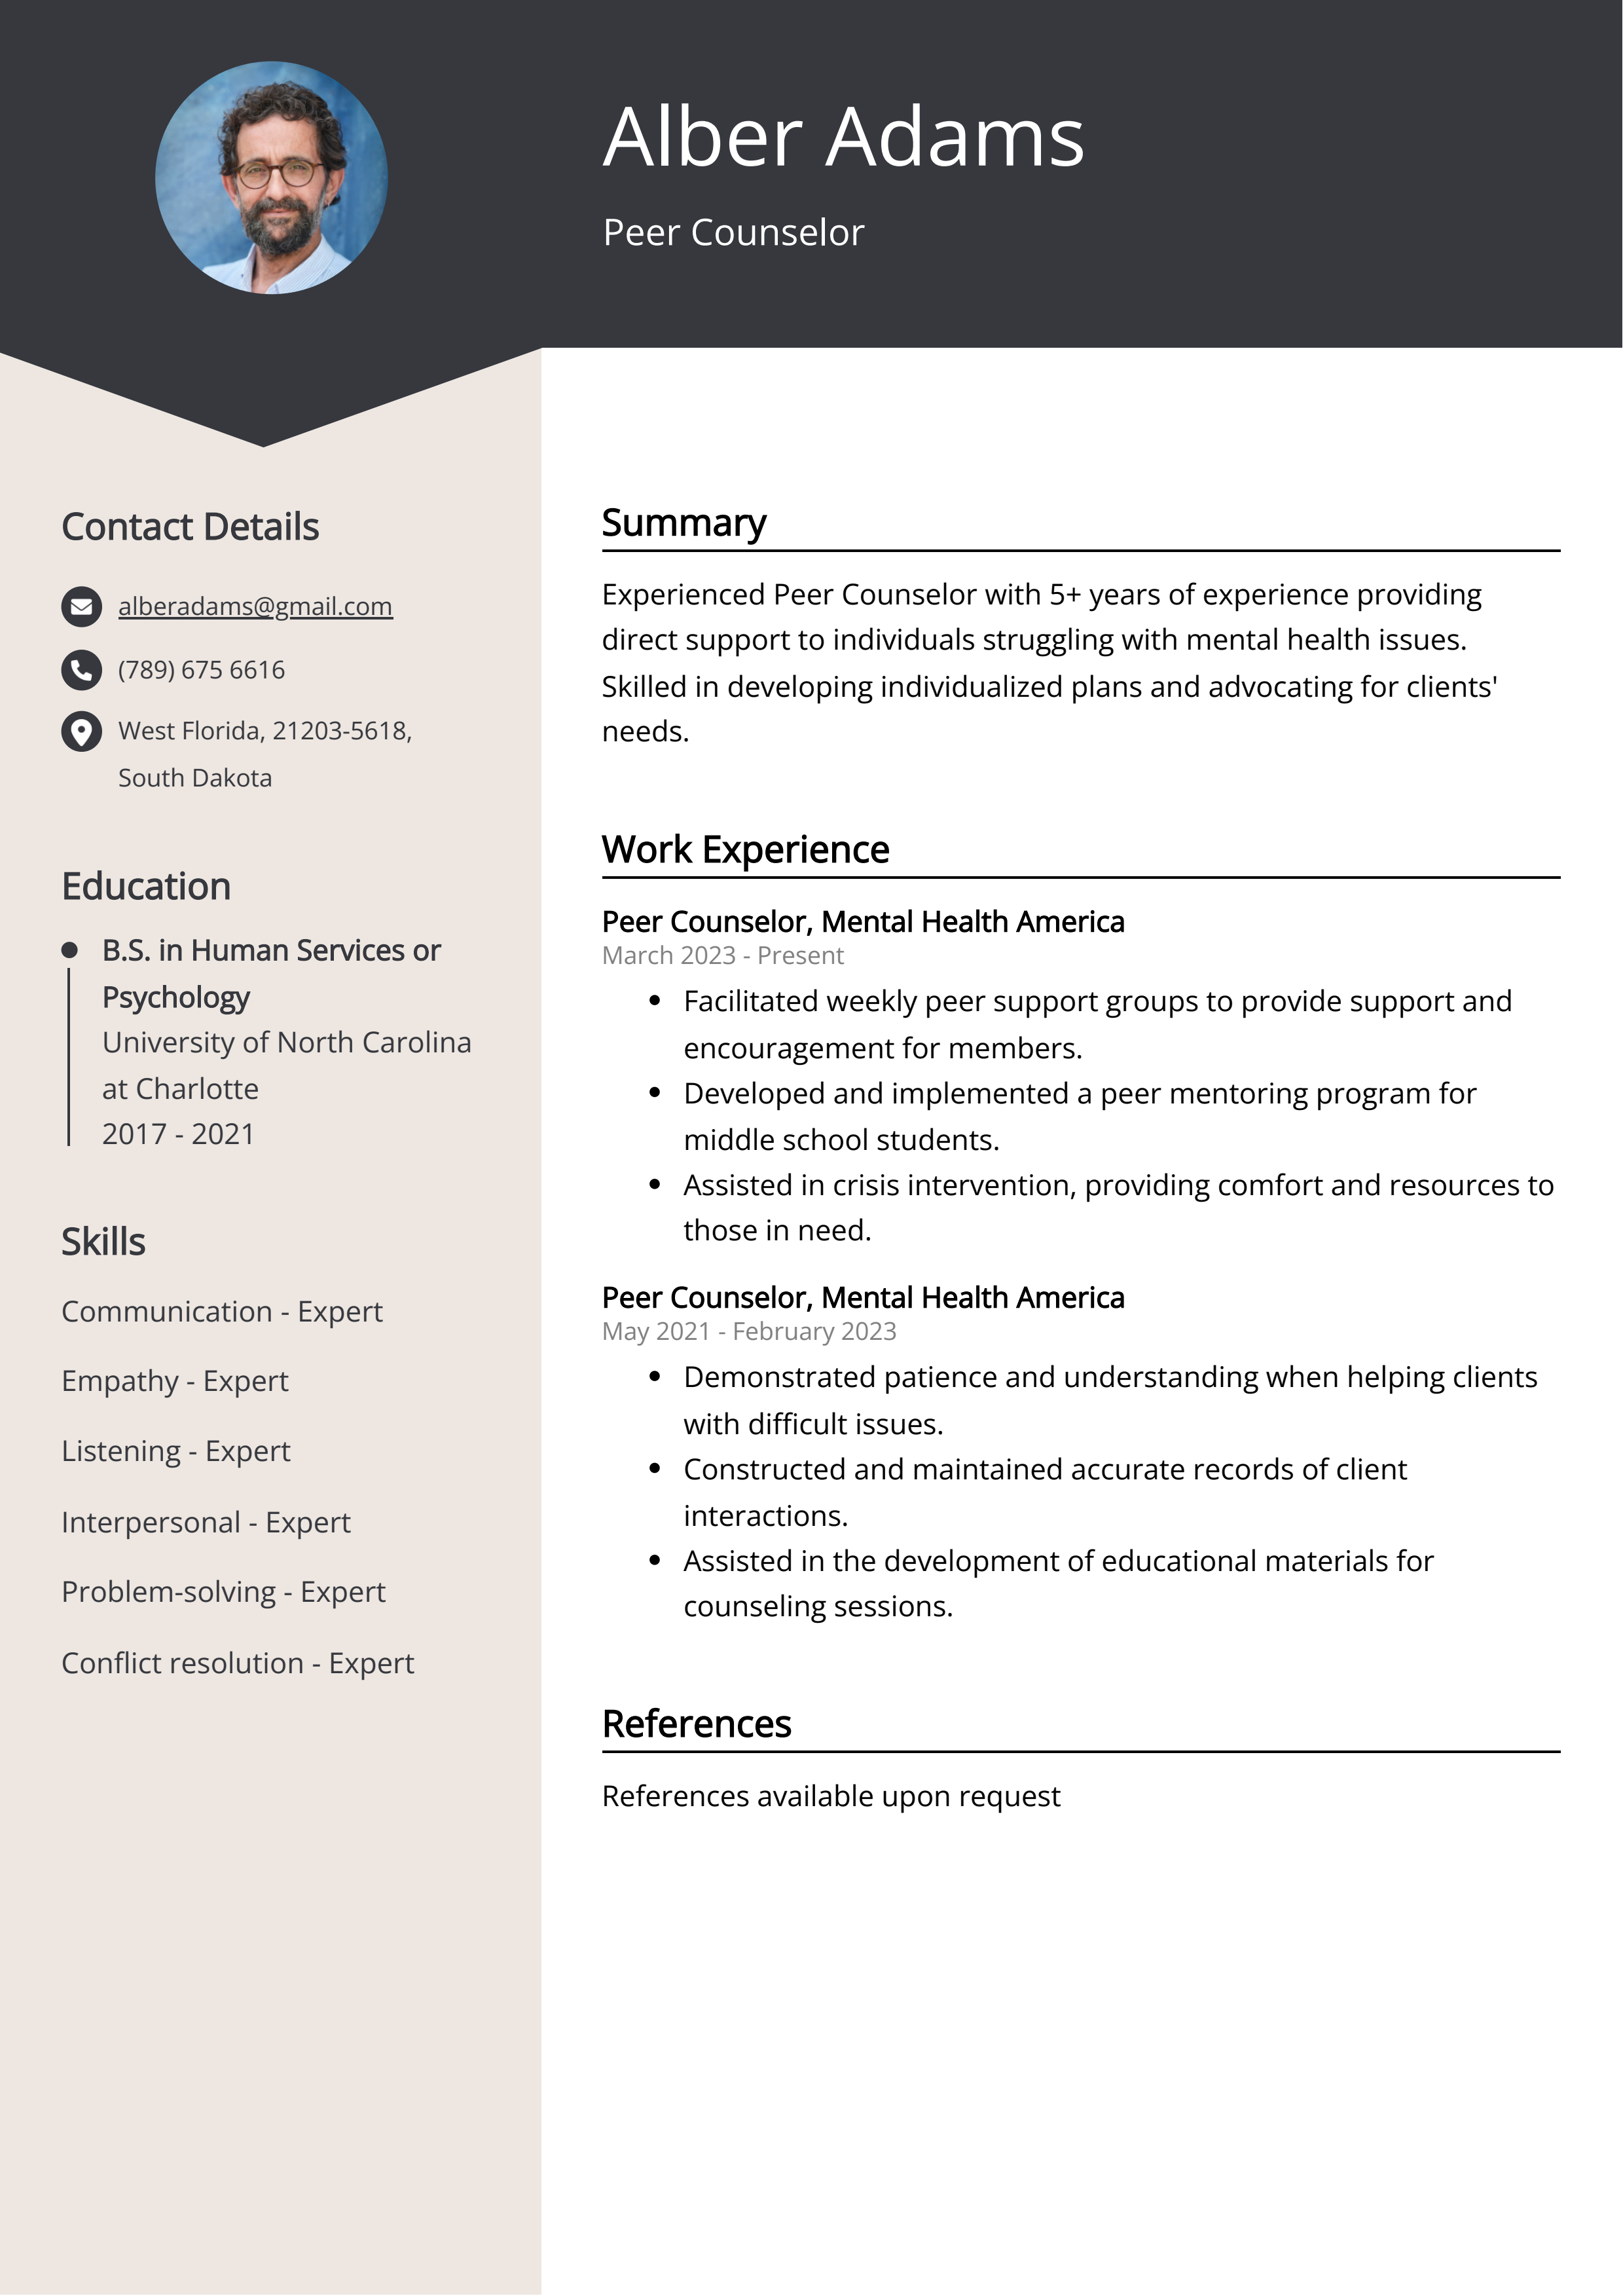 Peer Counselor CV Example